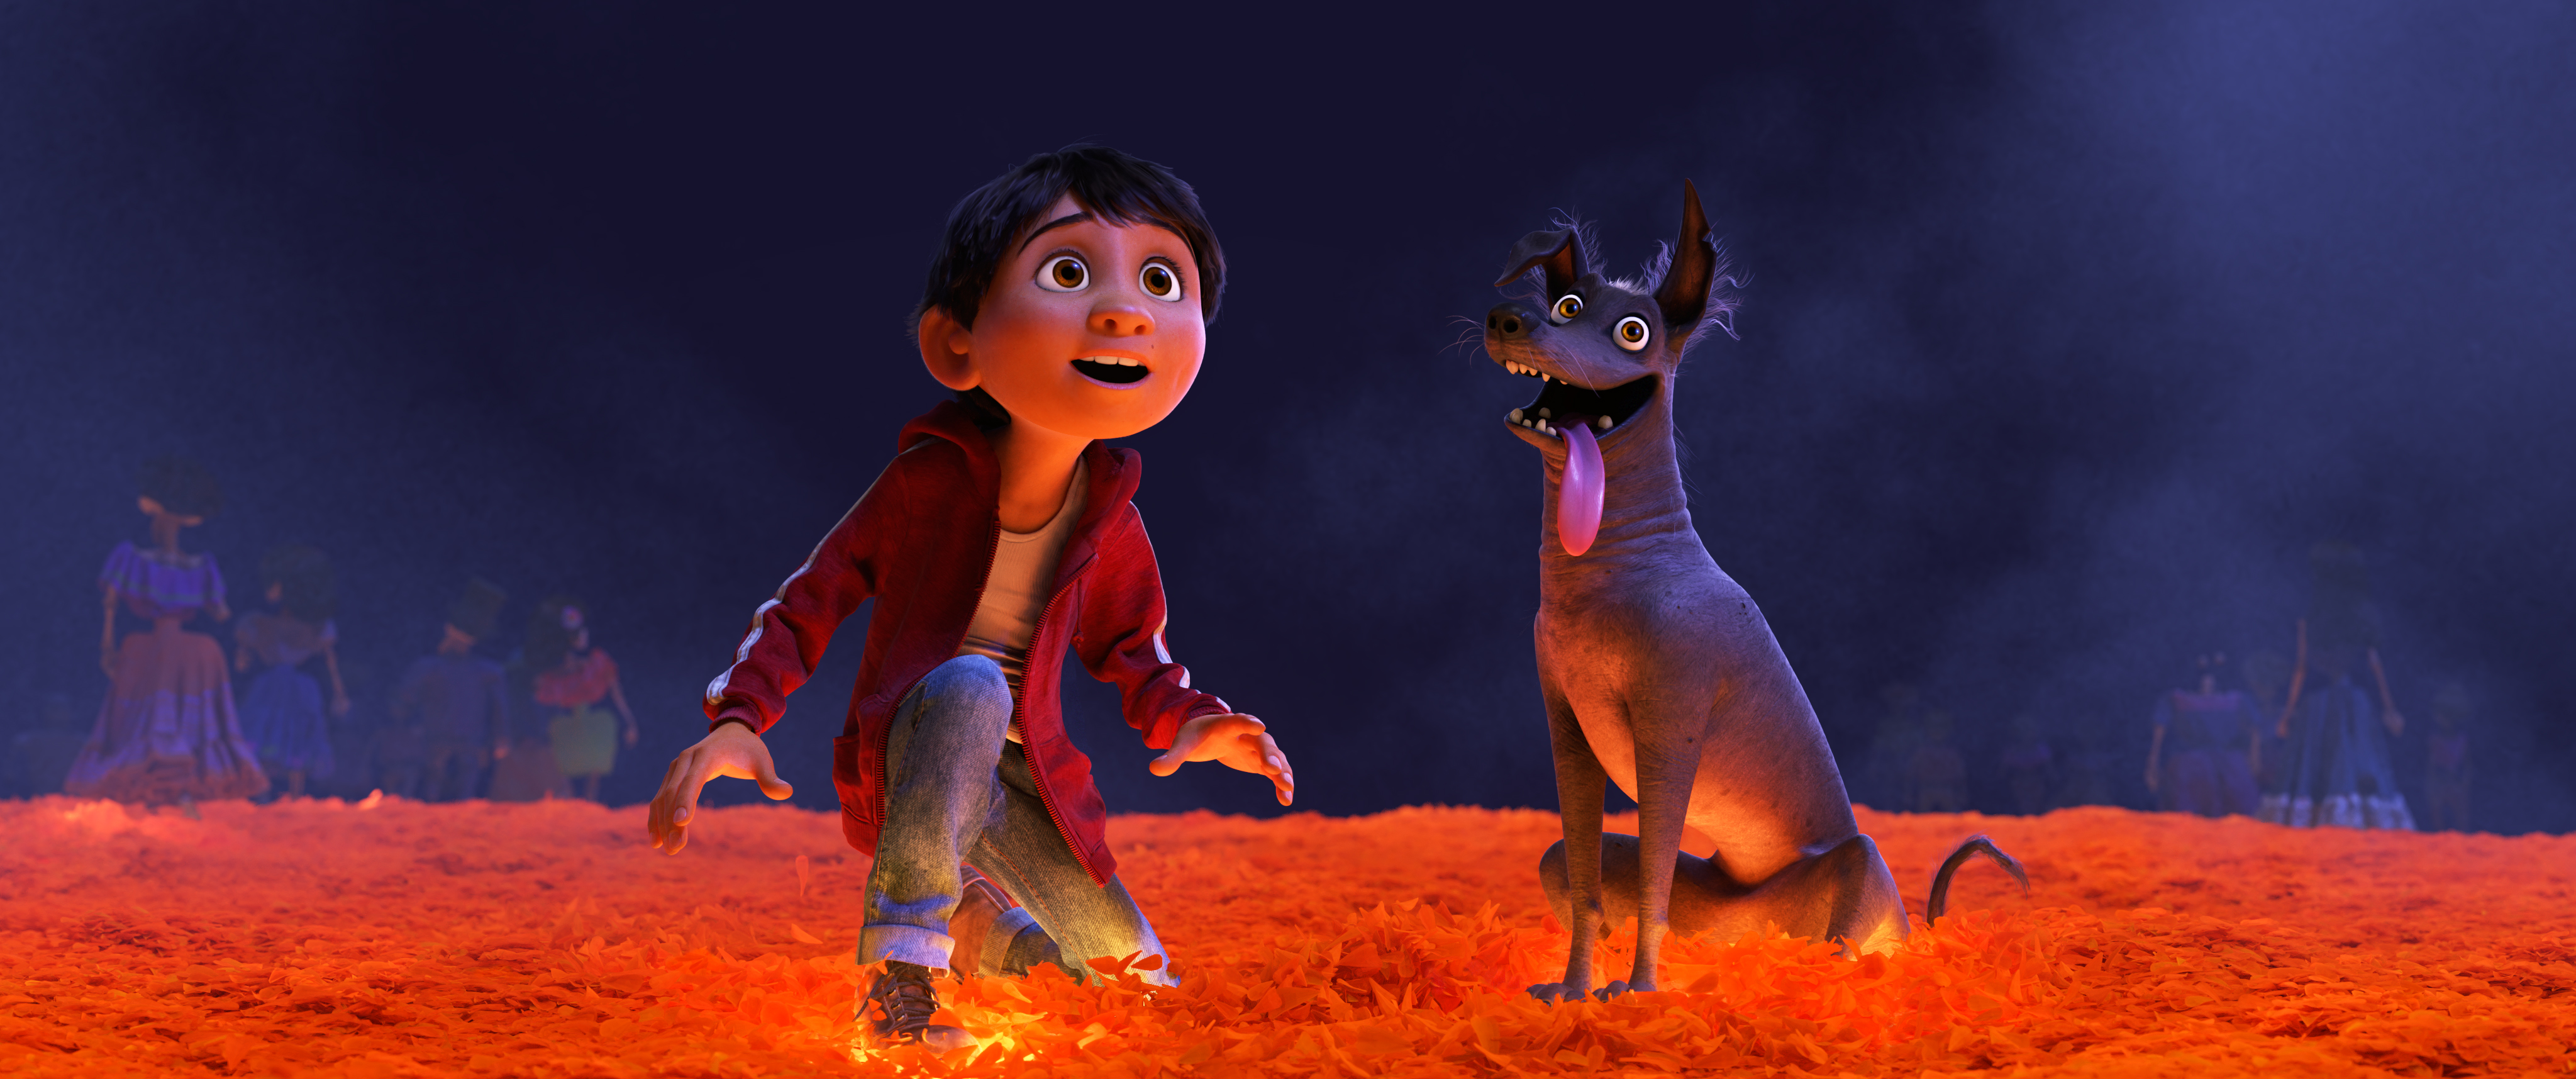 Disney·Pixar’s COCO – New Teaser Trailer Now Available